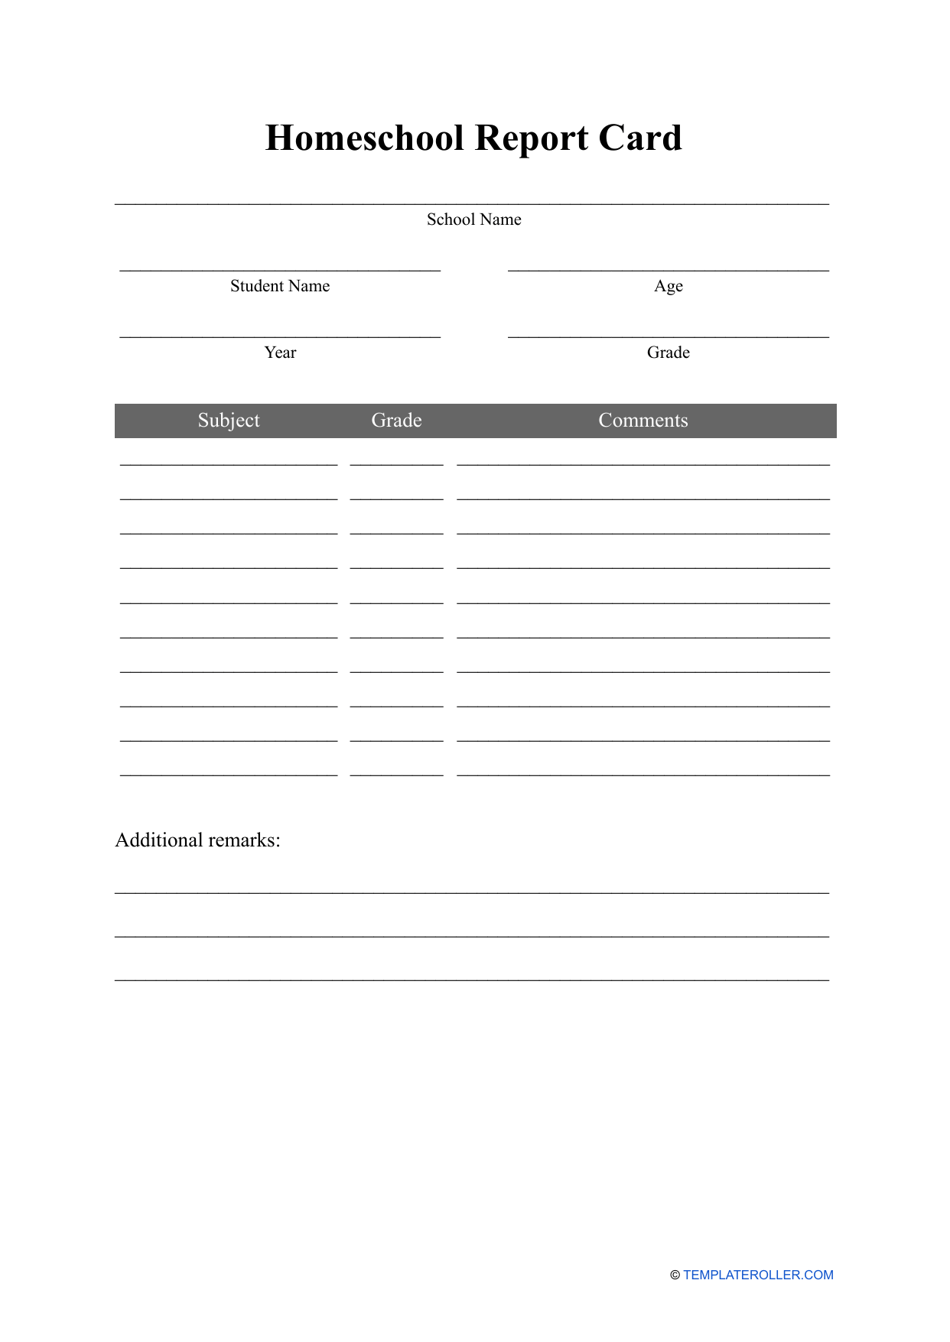 Homeschool Report Card Template Download Printable PDF With Homeschool Report Card Template